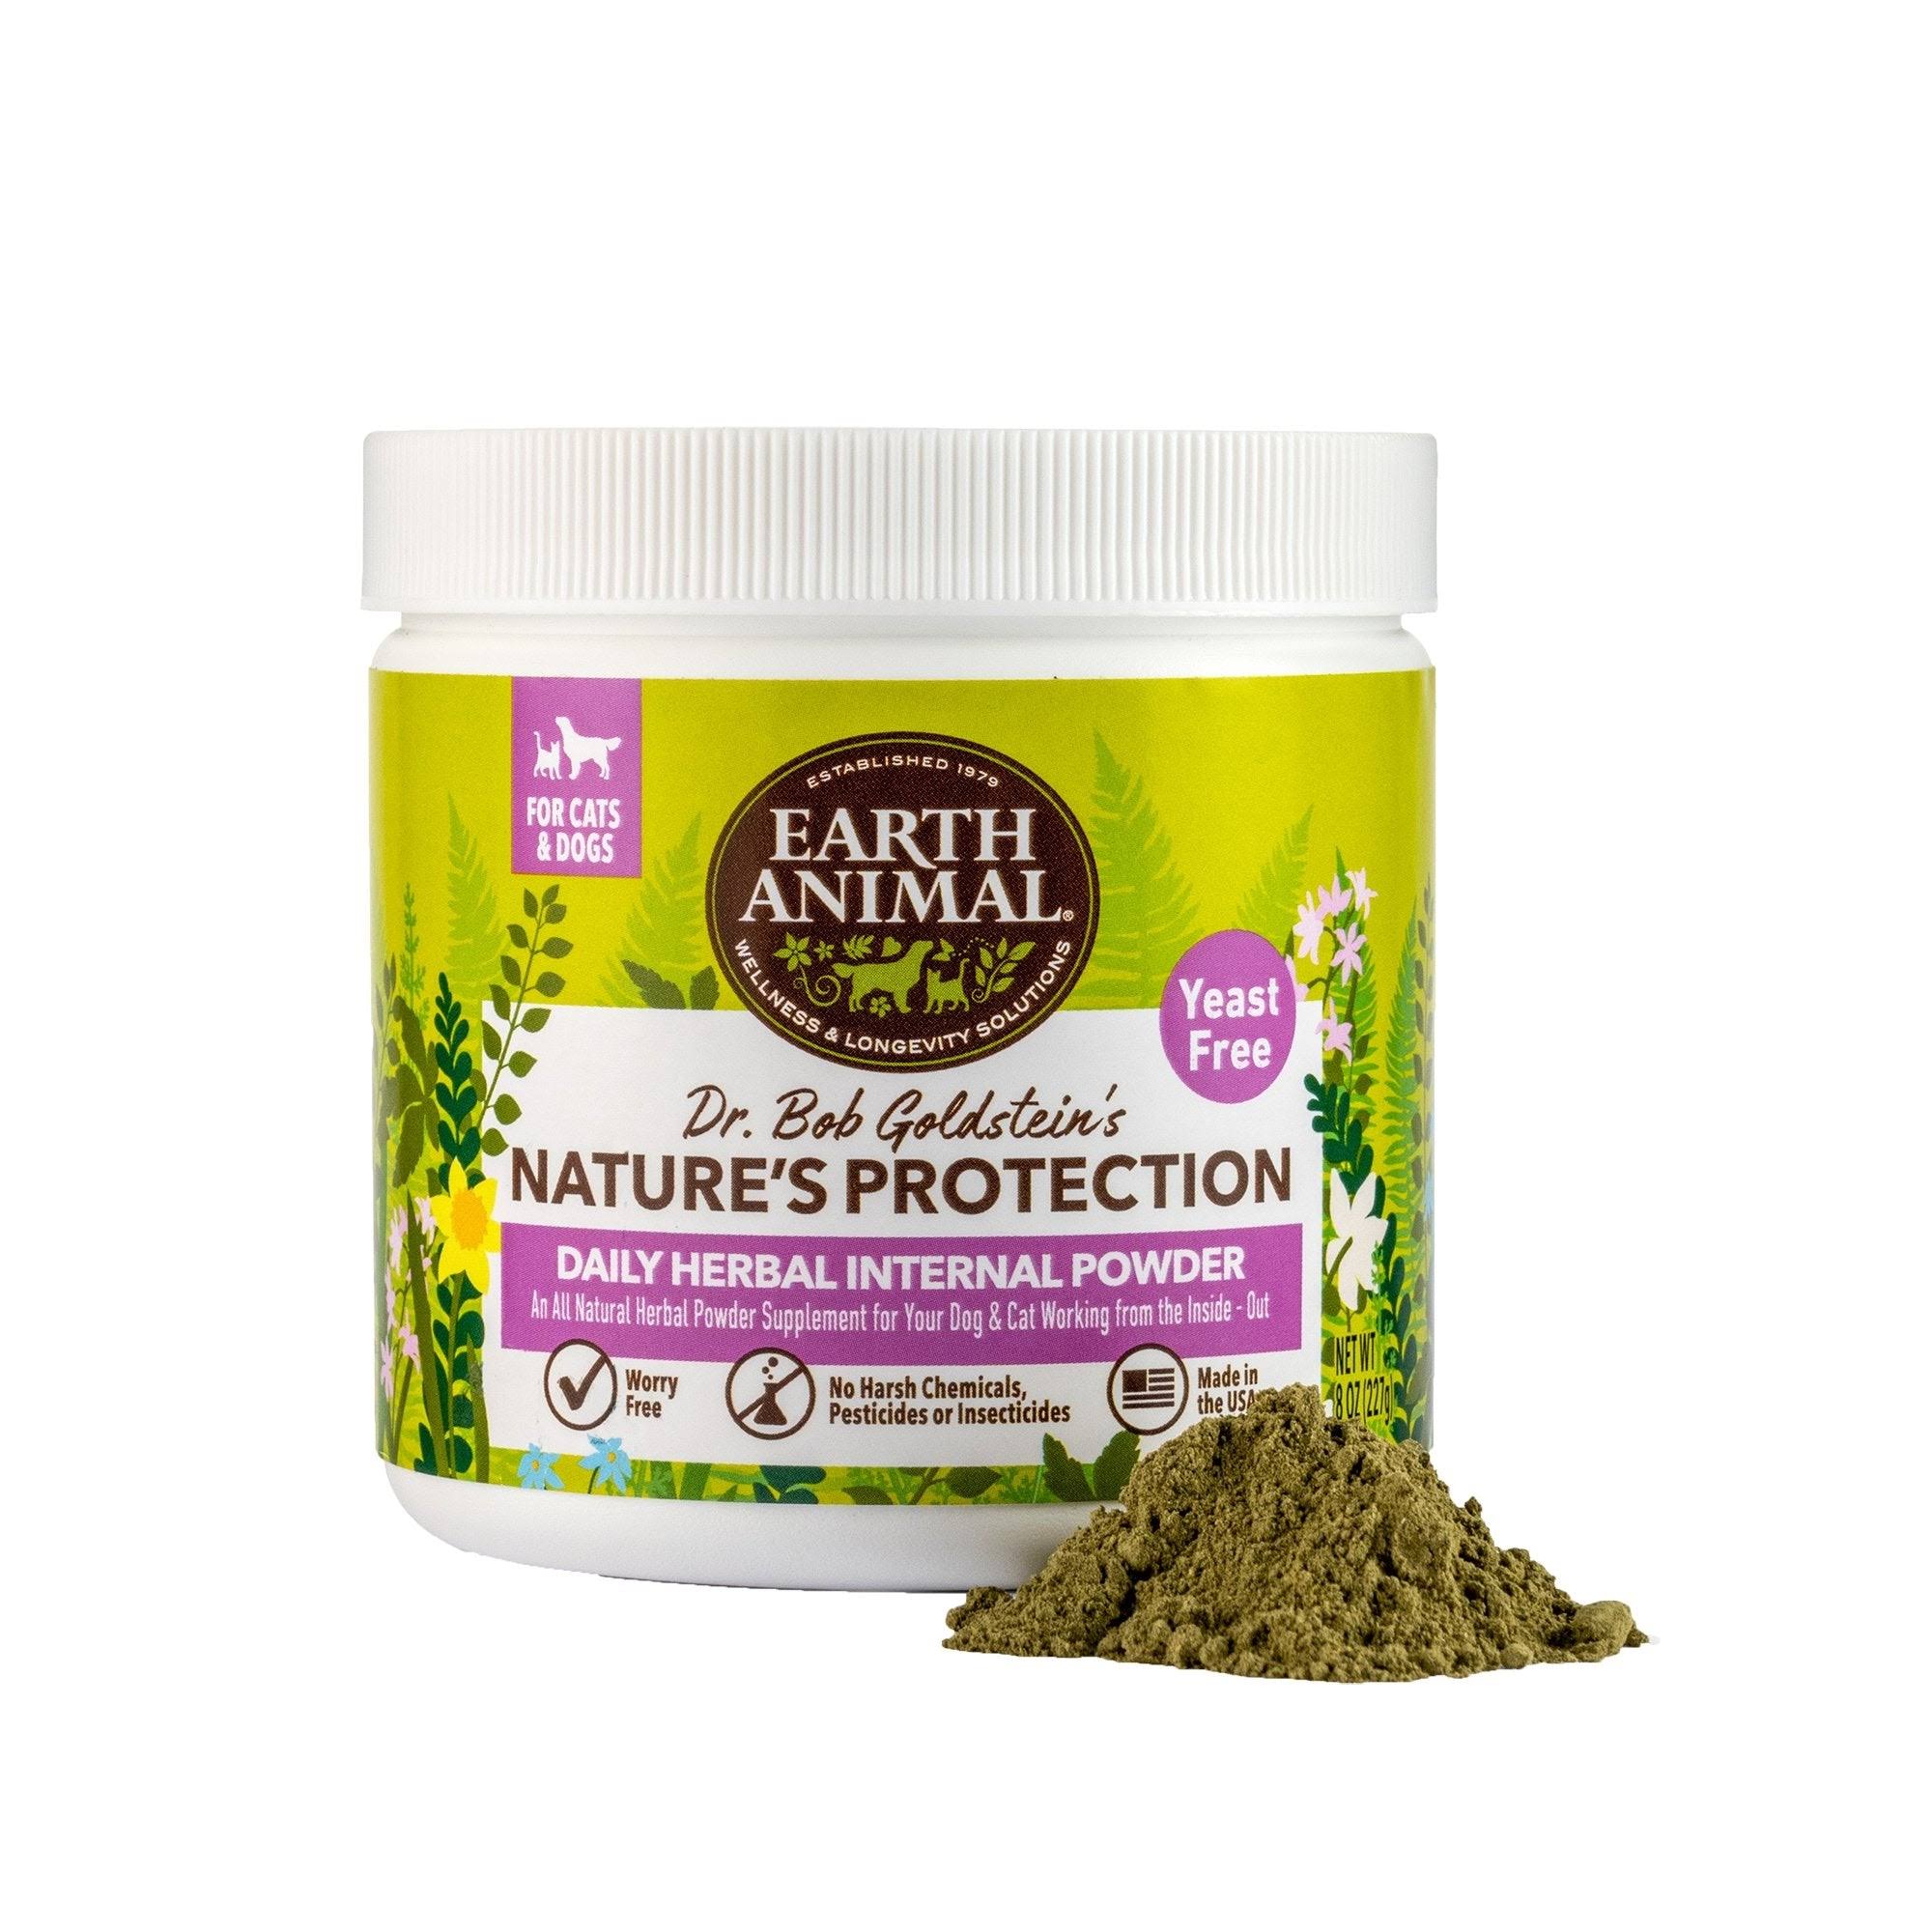 Earth Animal Flea & Tick Program Daily Herbal Internal Powder